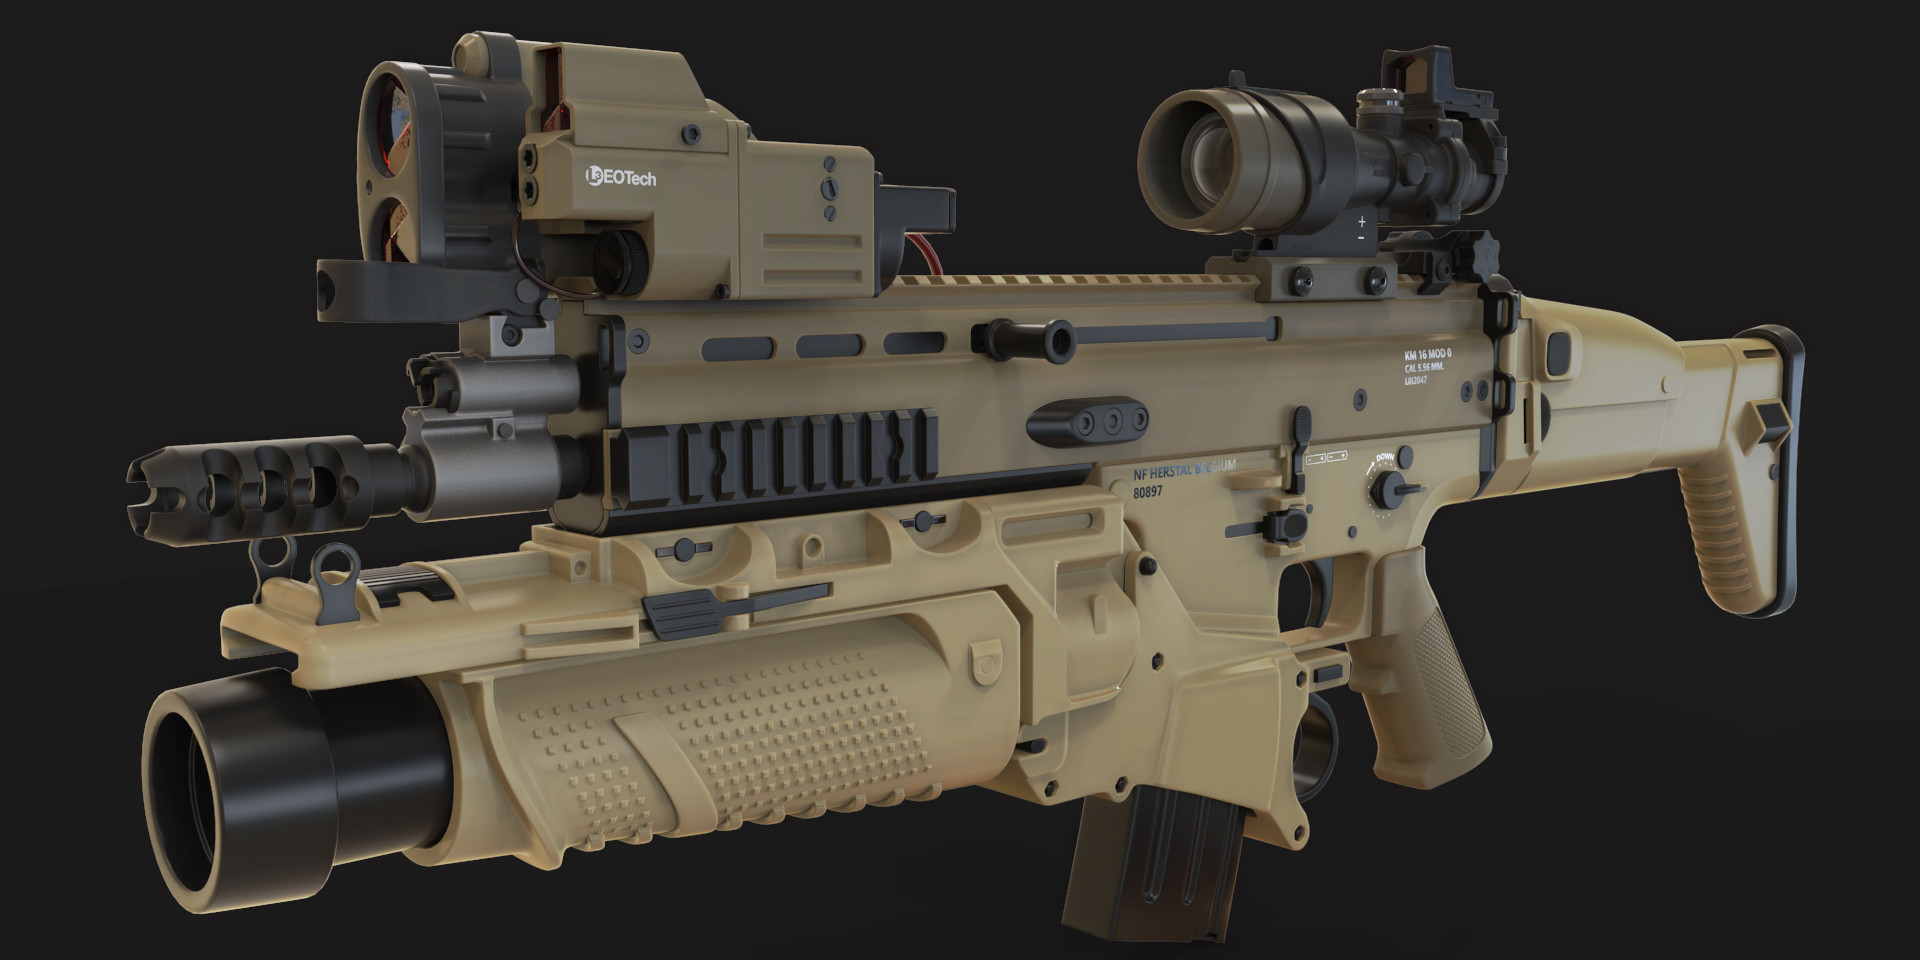 Скар автомат. Автомат FN scar. Штурмовая винтовка scar-h MK.17. ФН скар с подствольным гранатометом. FN scar-l автомат.